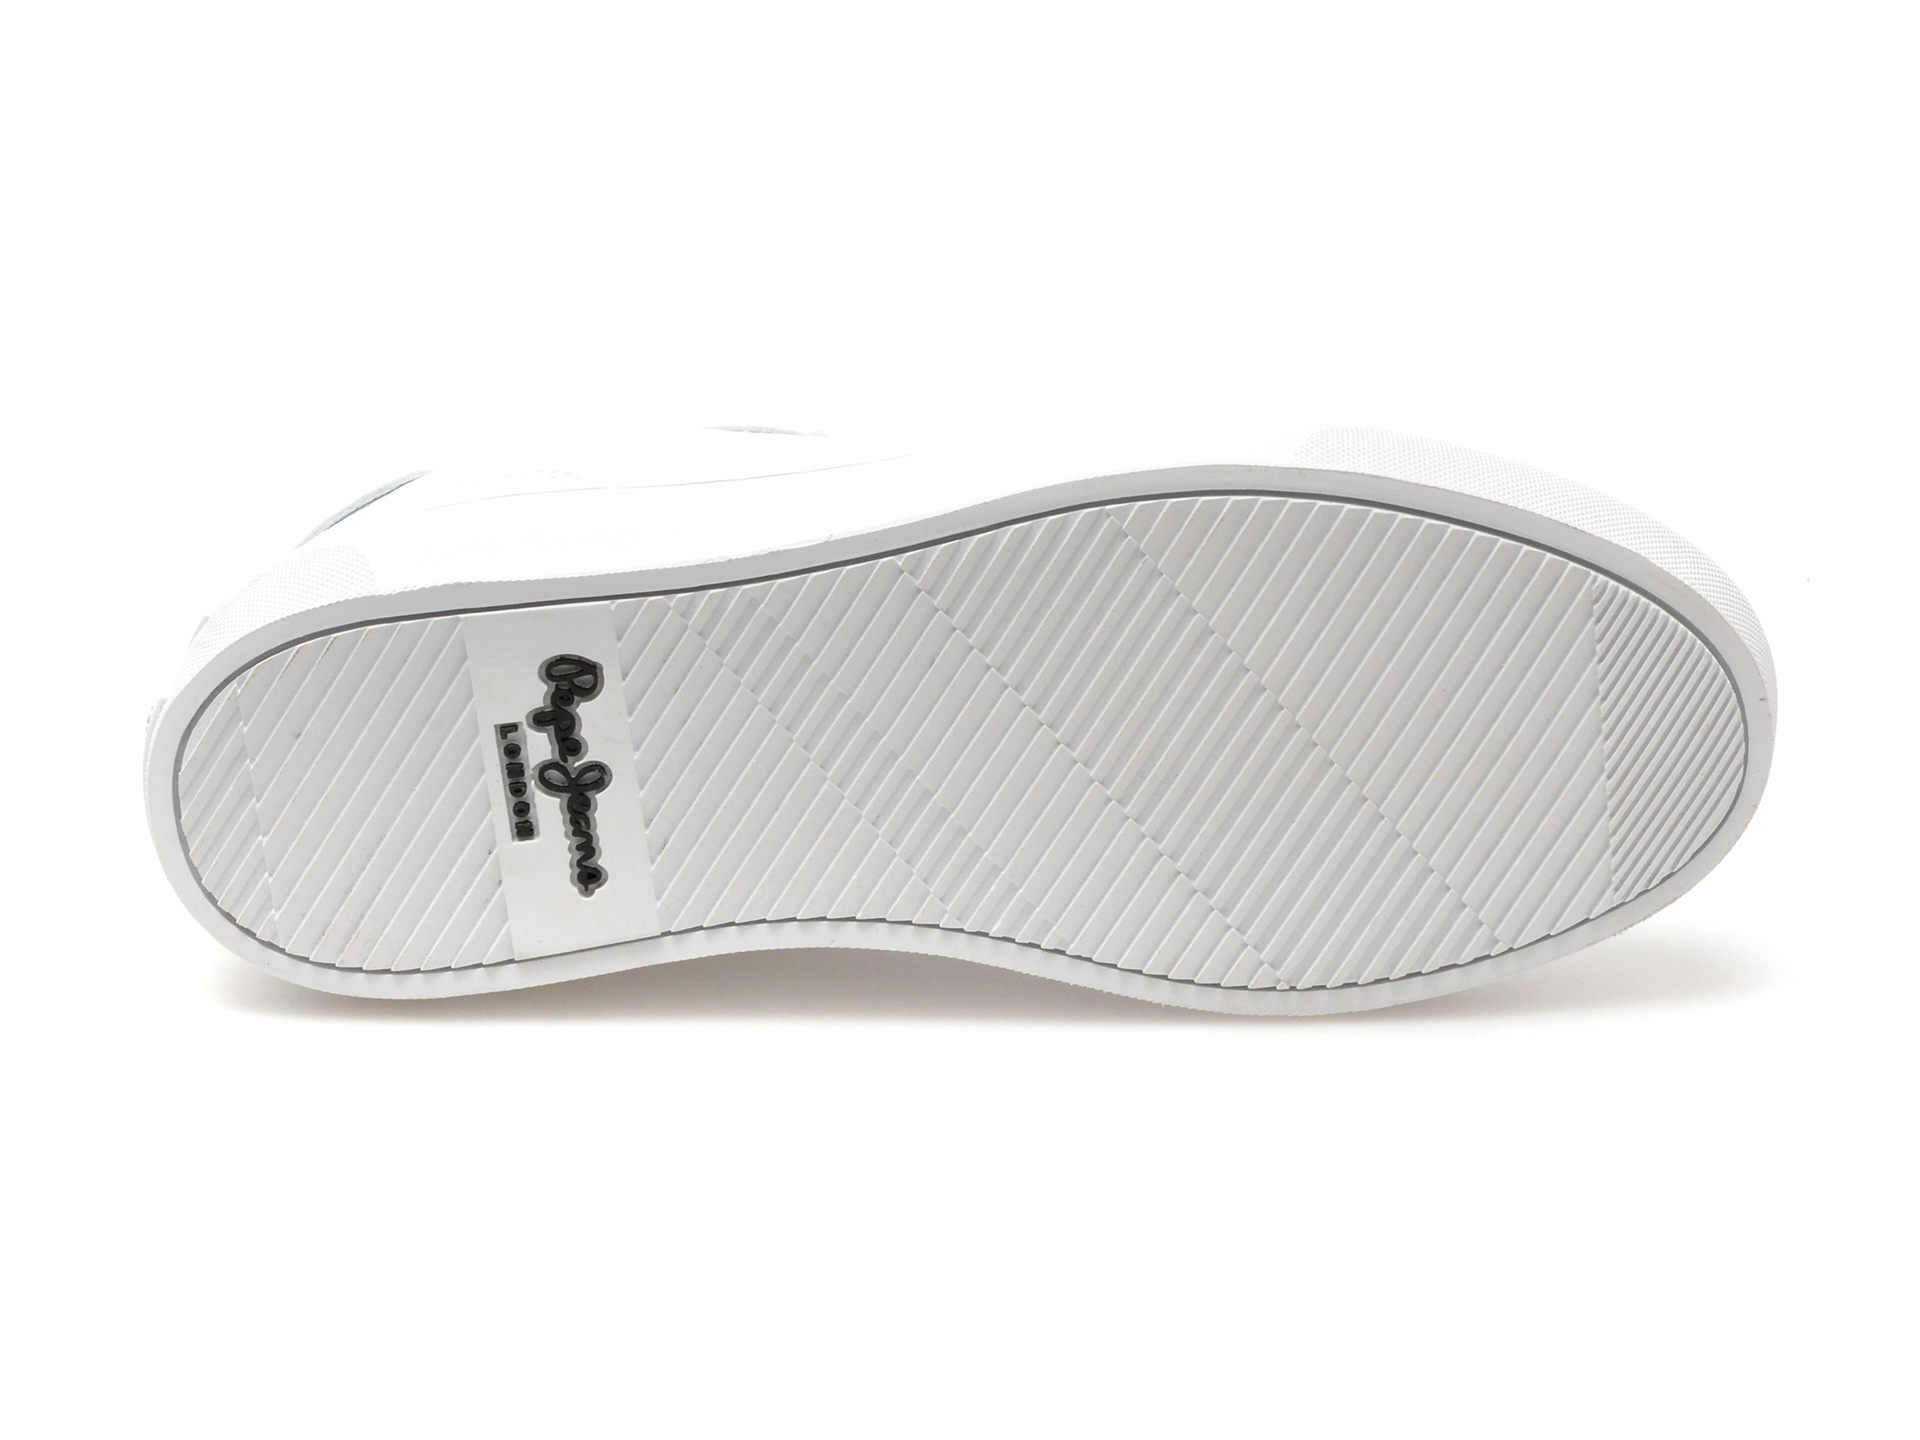 Pantofi Casual PEPE JEANS albi, LS00002, din piele naturala